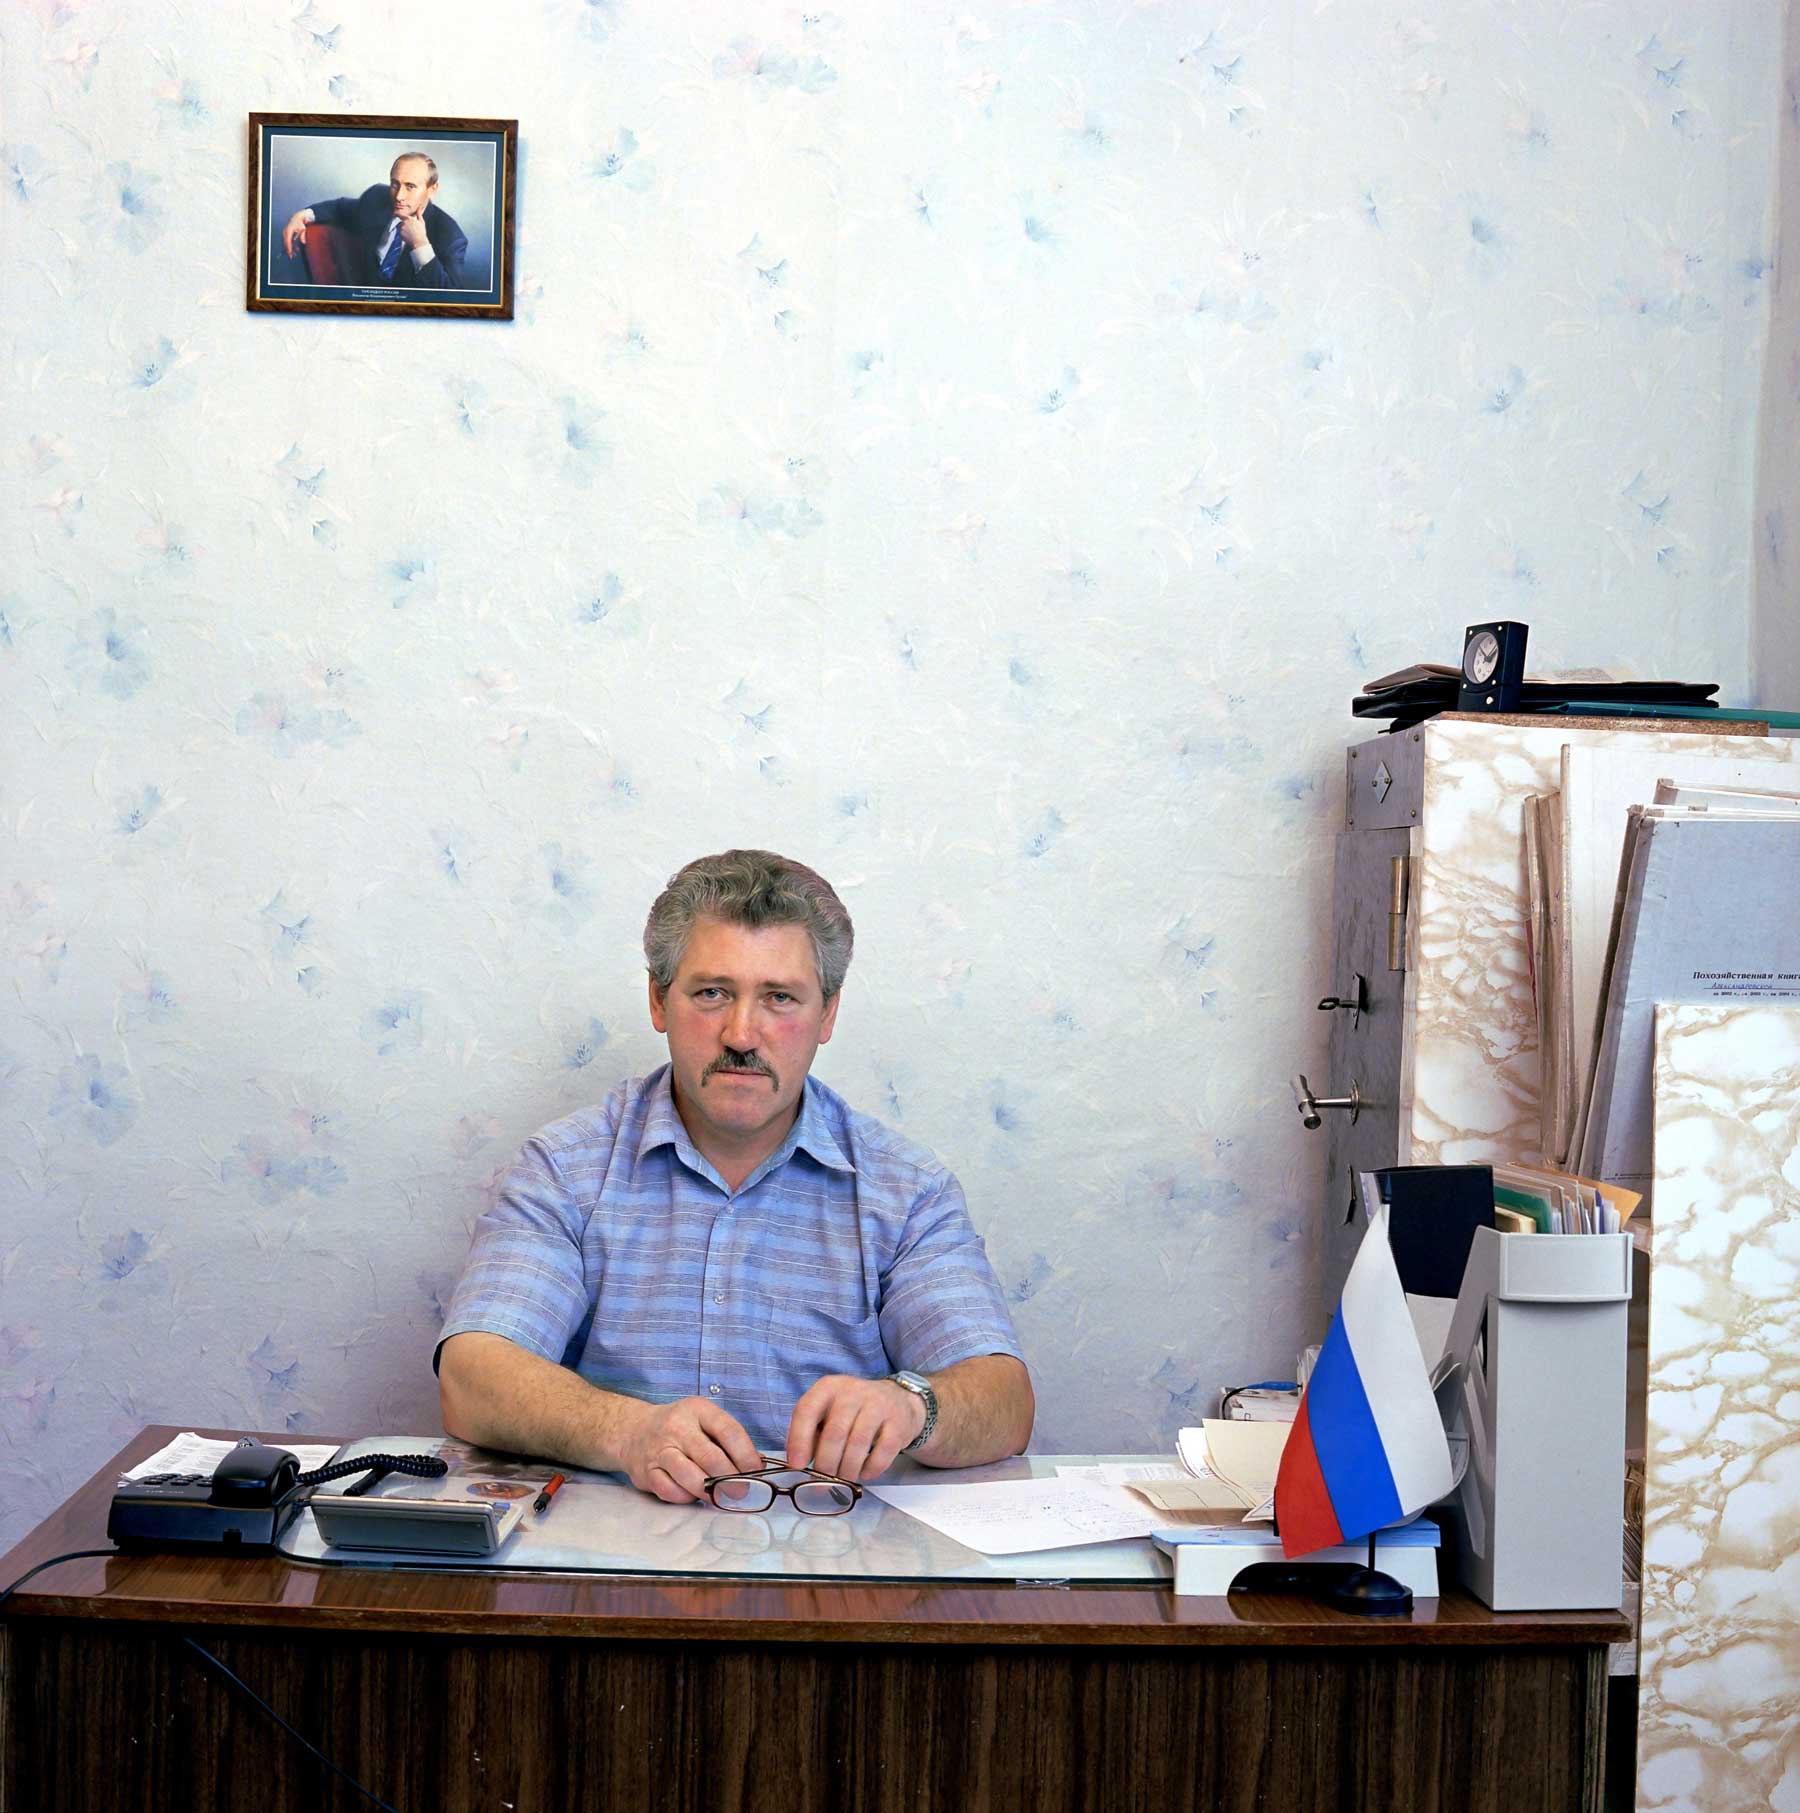 Russia-24/2004 [Ale., NIV (b. 1954)]
Nikolajevich Ilyich Volkov (b. 1954) is administrator of the village of Alexandrovskoye (some 1,000 inhabitants), Tomsk province. Monthly salary: 9,000 rubles ($ 321, euro 243).